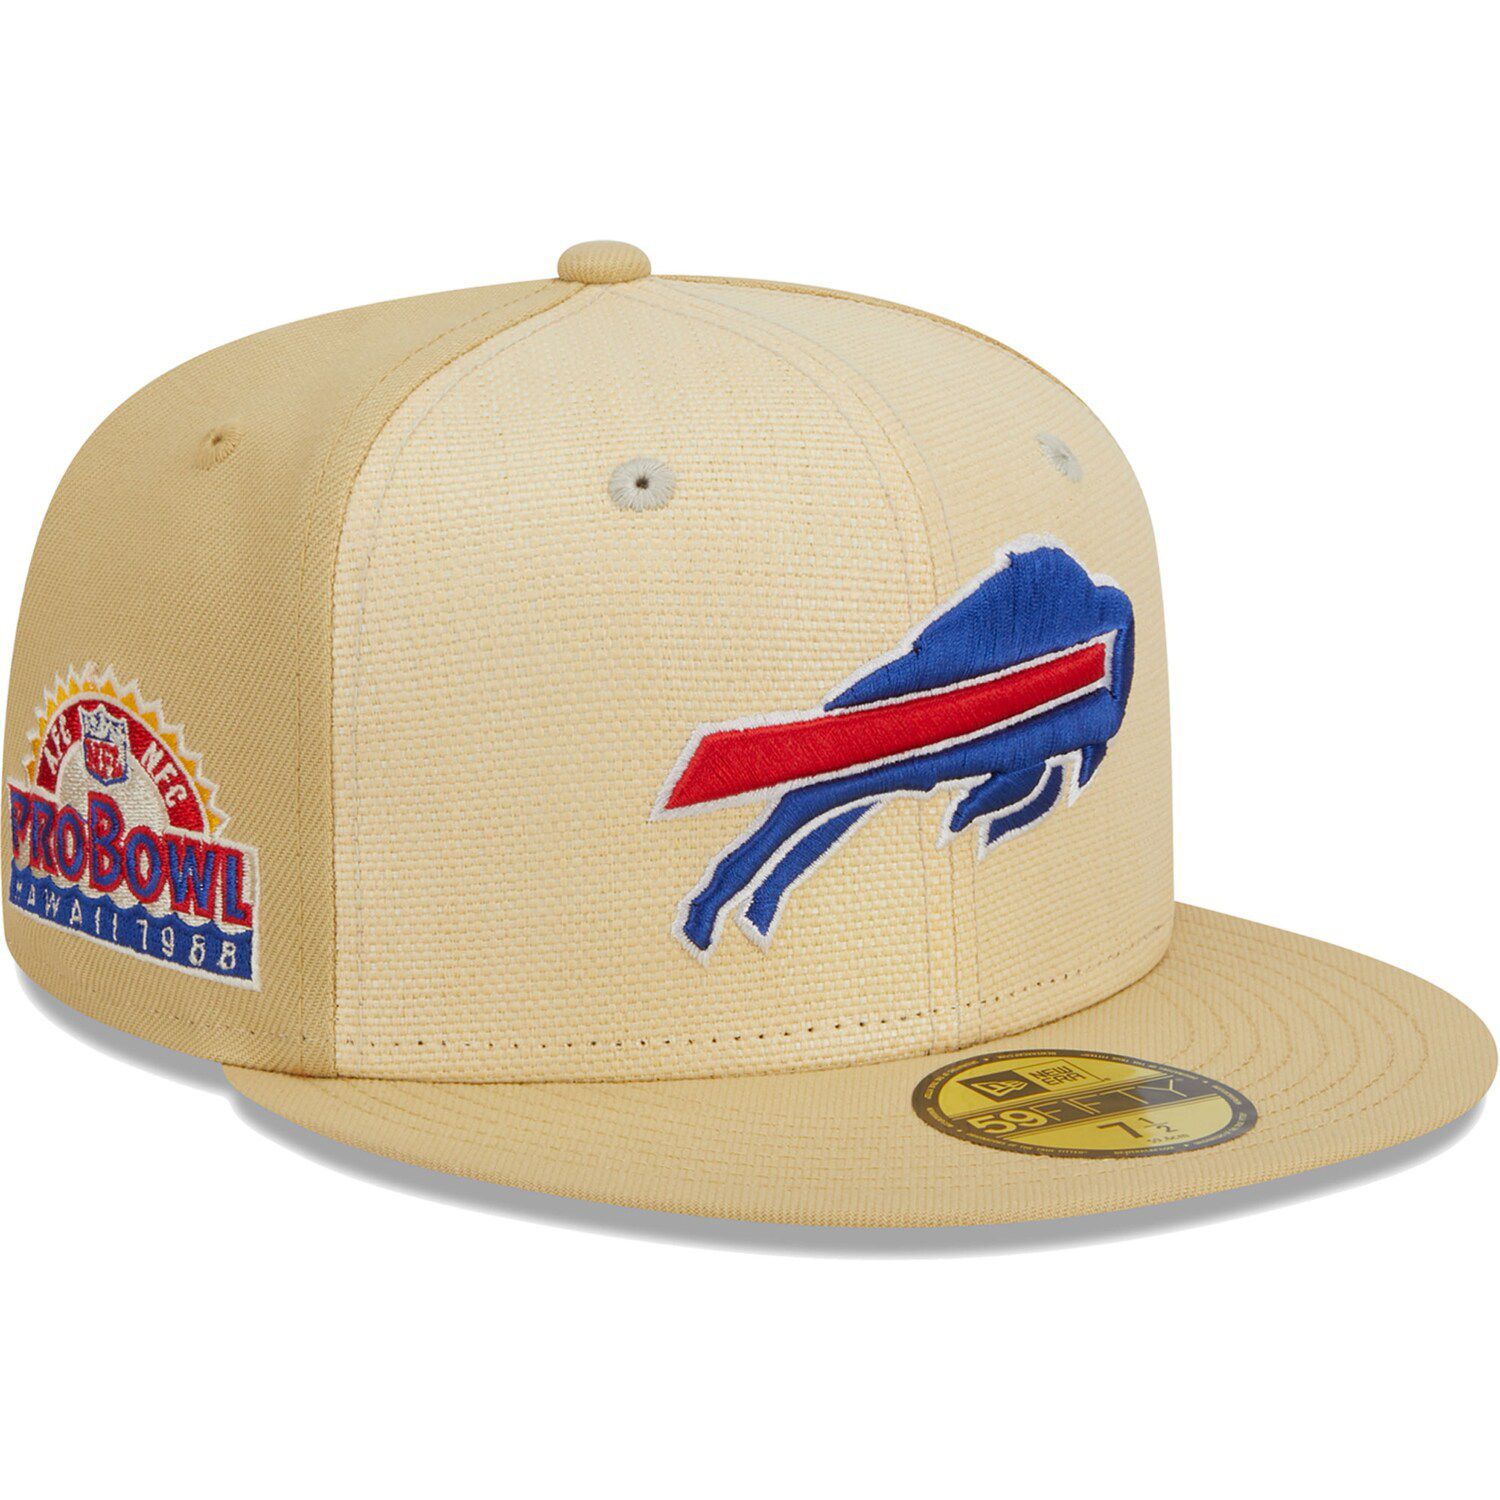 New Era Buffalo Bills Patch Pro 1988 9Fifty Snapback Cap, SNAPBACK HATS, CAPS